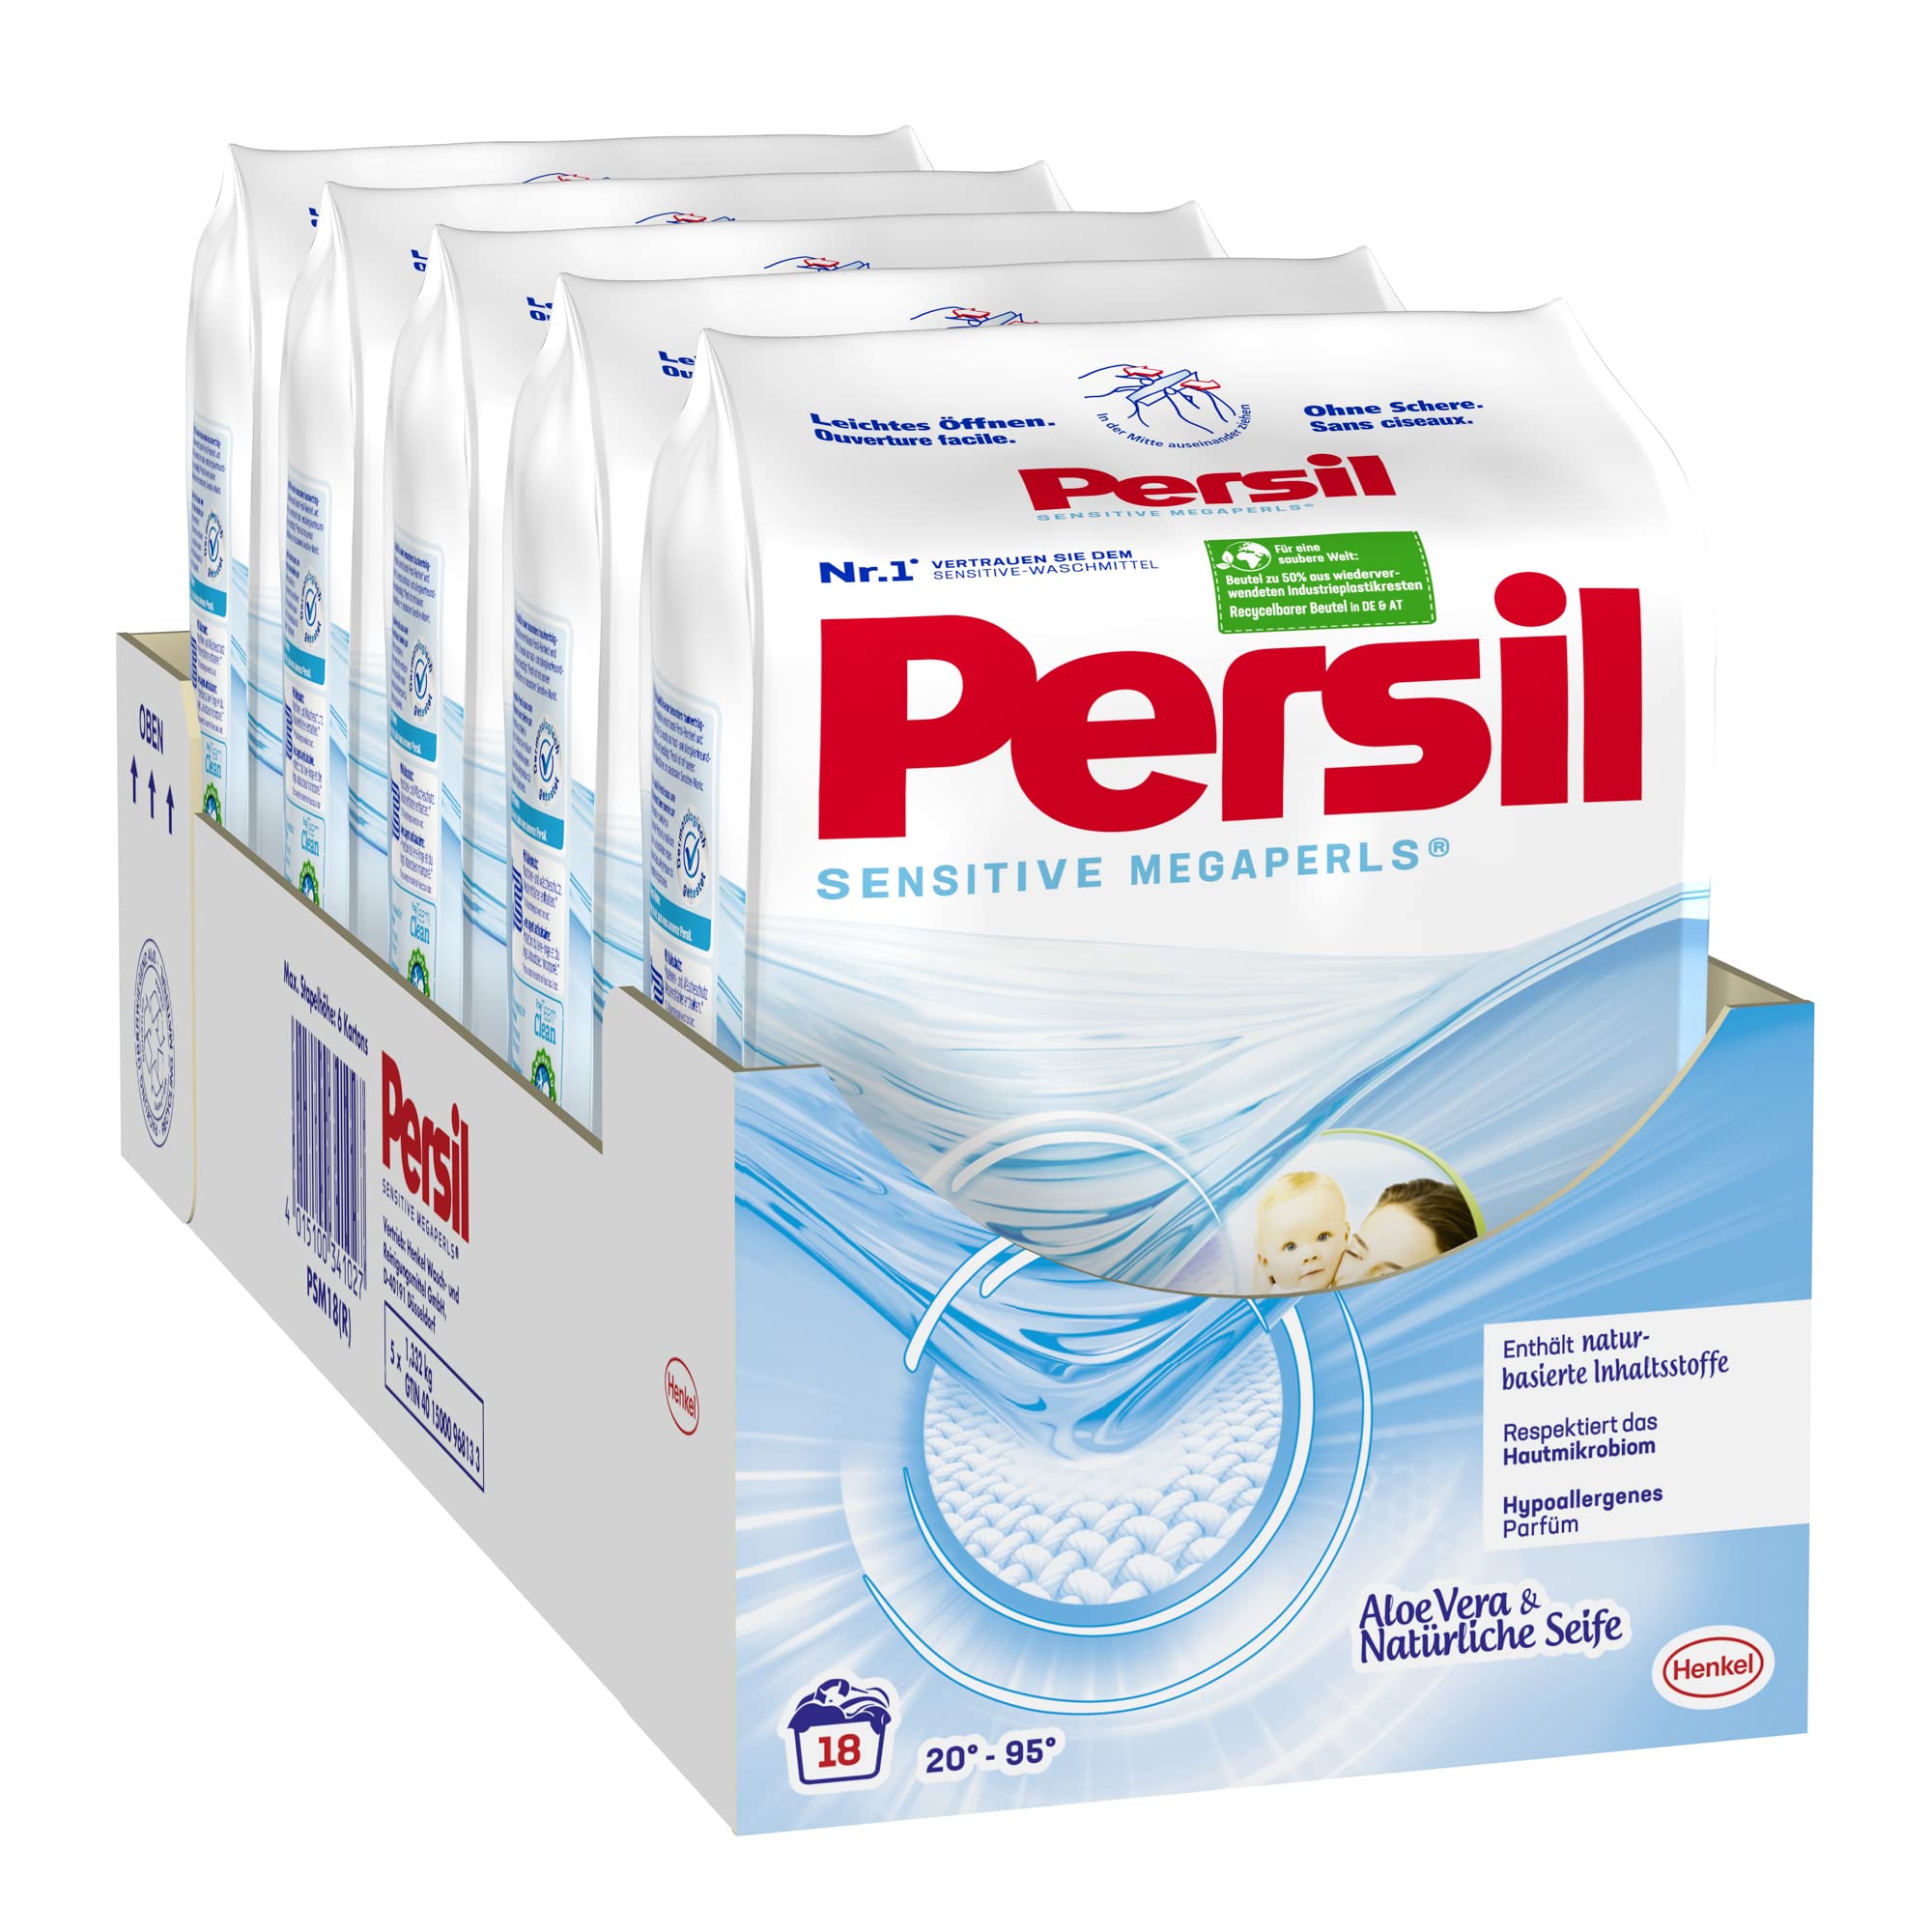 Persil Sensitive Megaperls (90 Waschladungen), ECARF-zertifiziertes Sensitive Waschmittel, duftet nach Aloe Vera & natürlicher Seife, (5er pack)